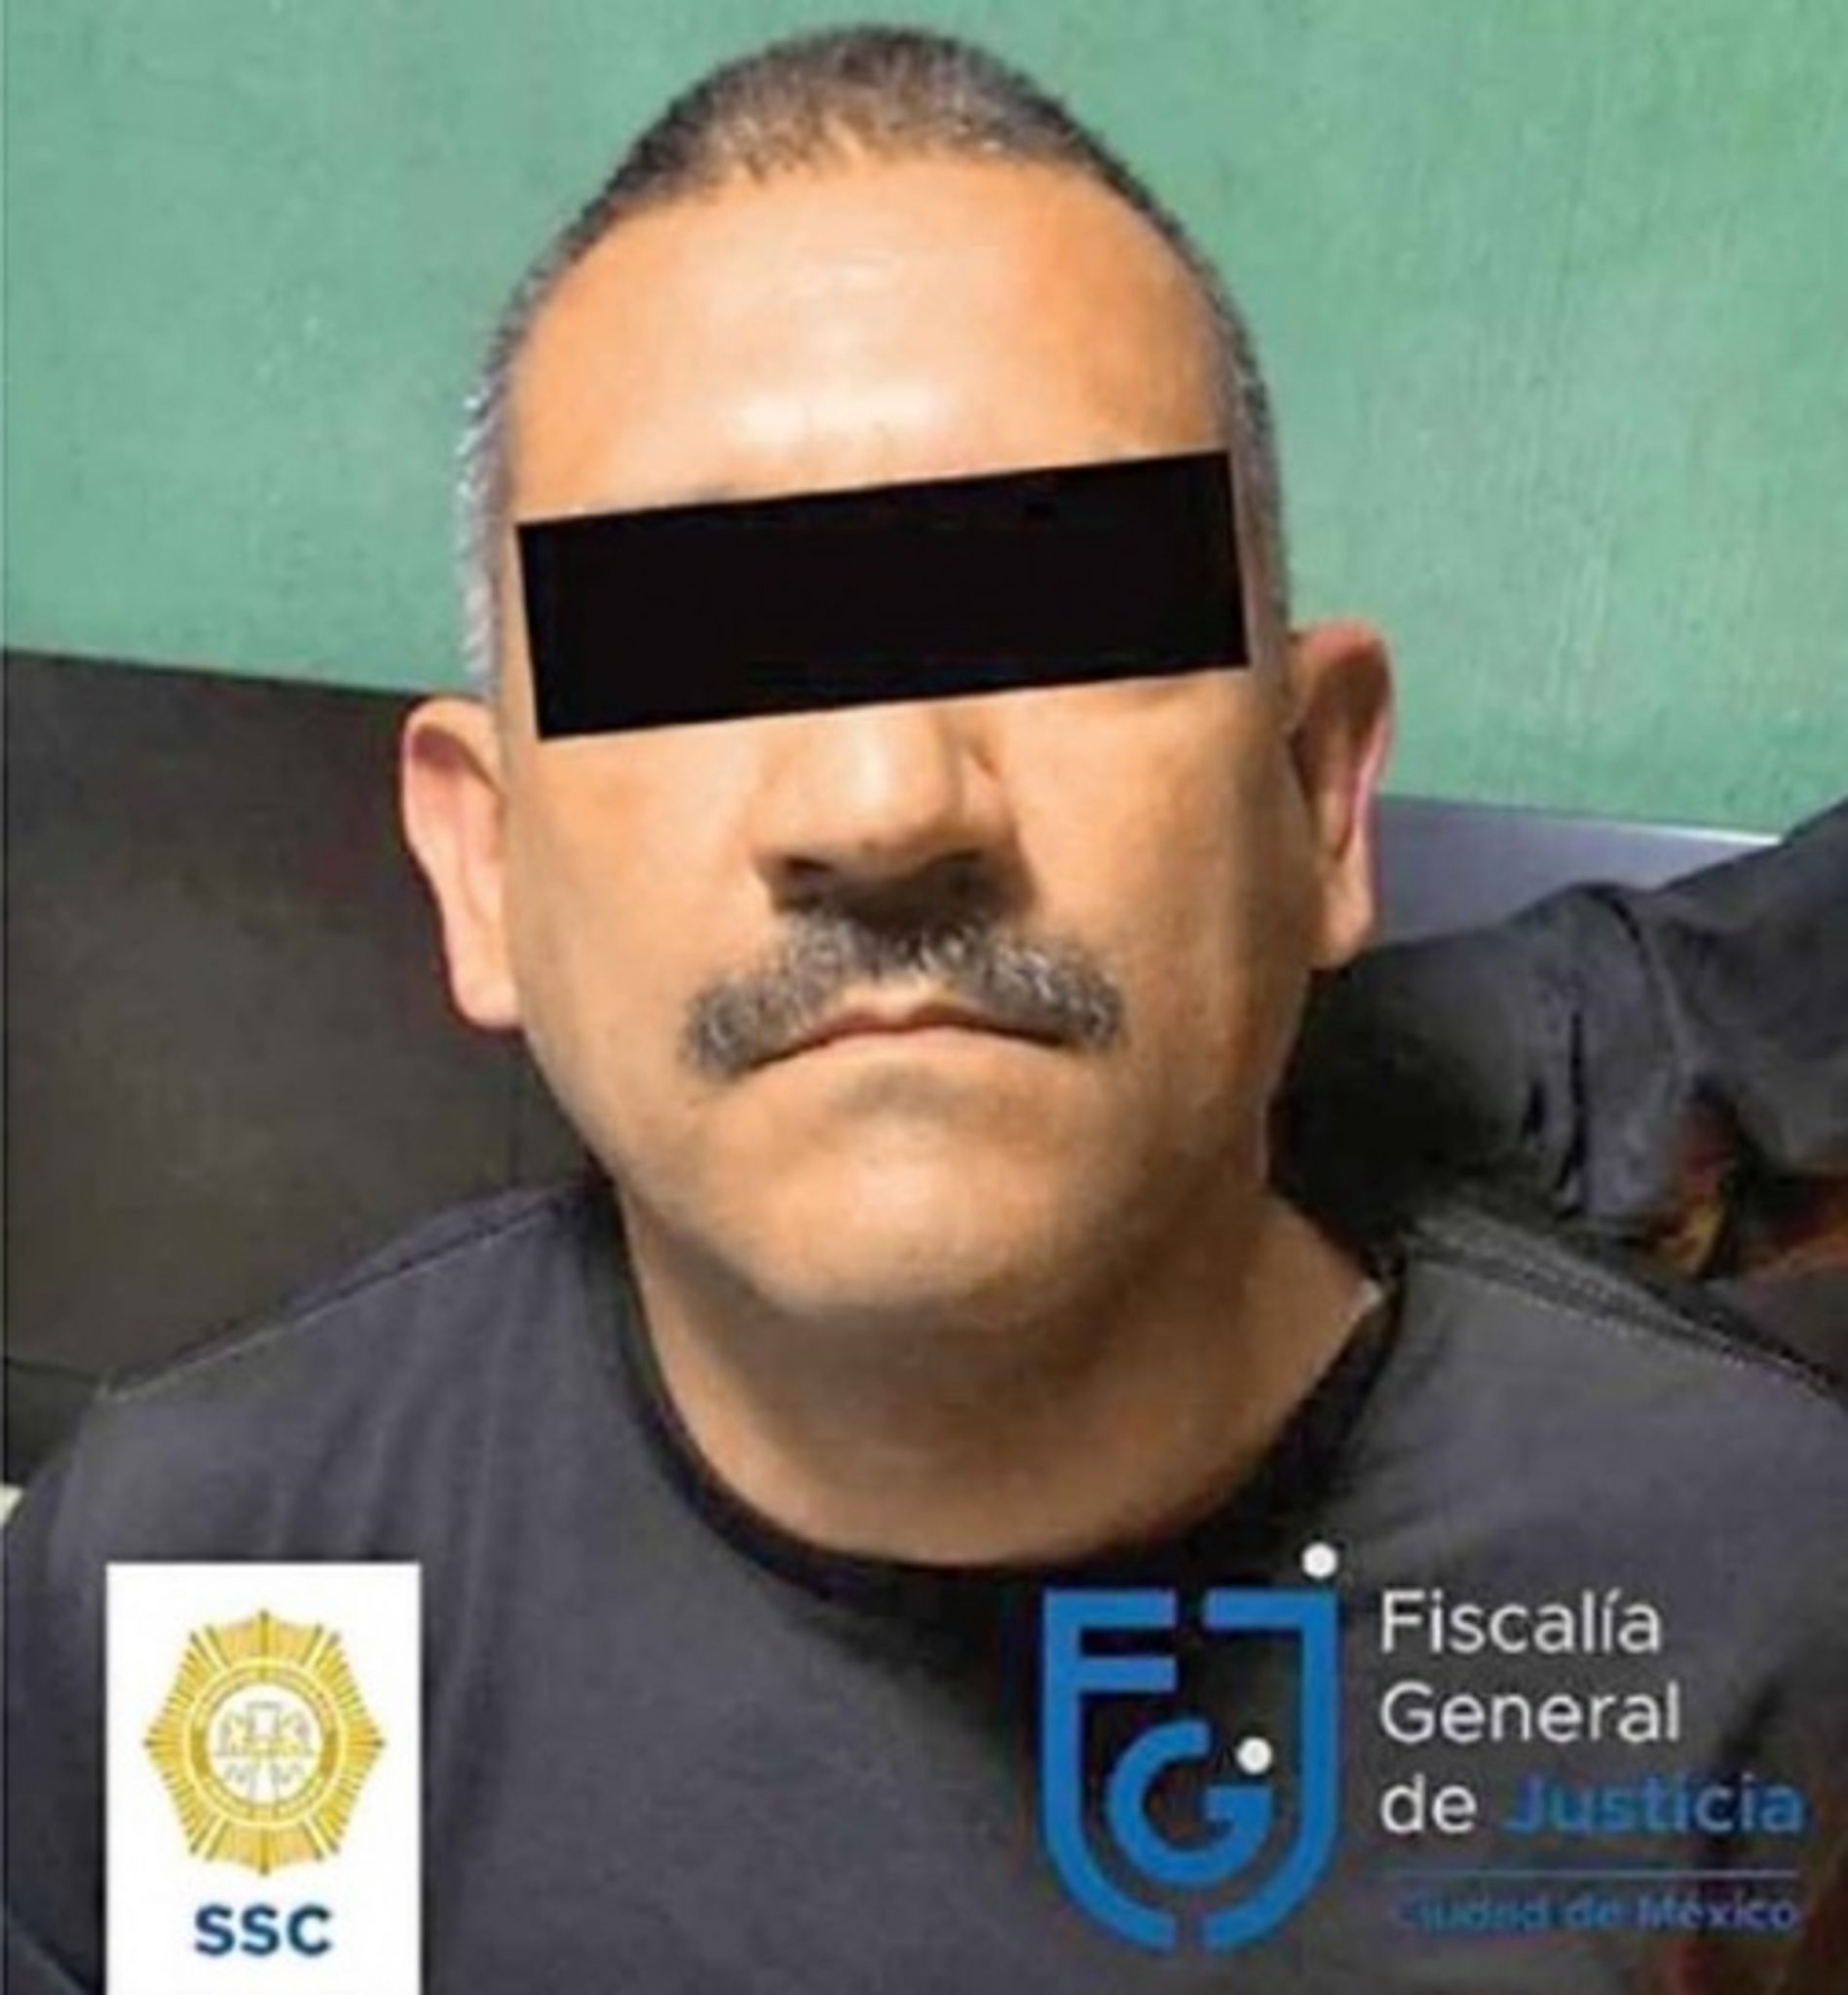 CJNG Hitman Arrested For Killing Two Israeli Mafiosos - ViralTab